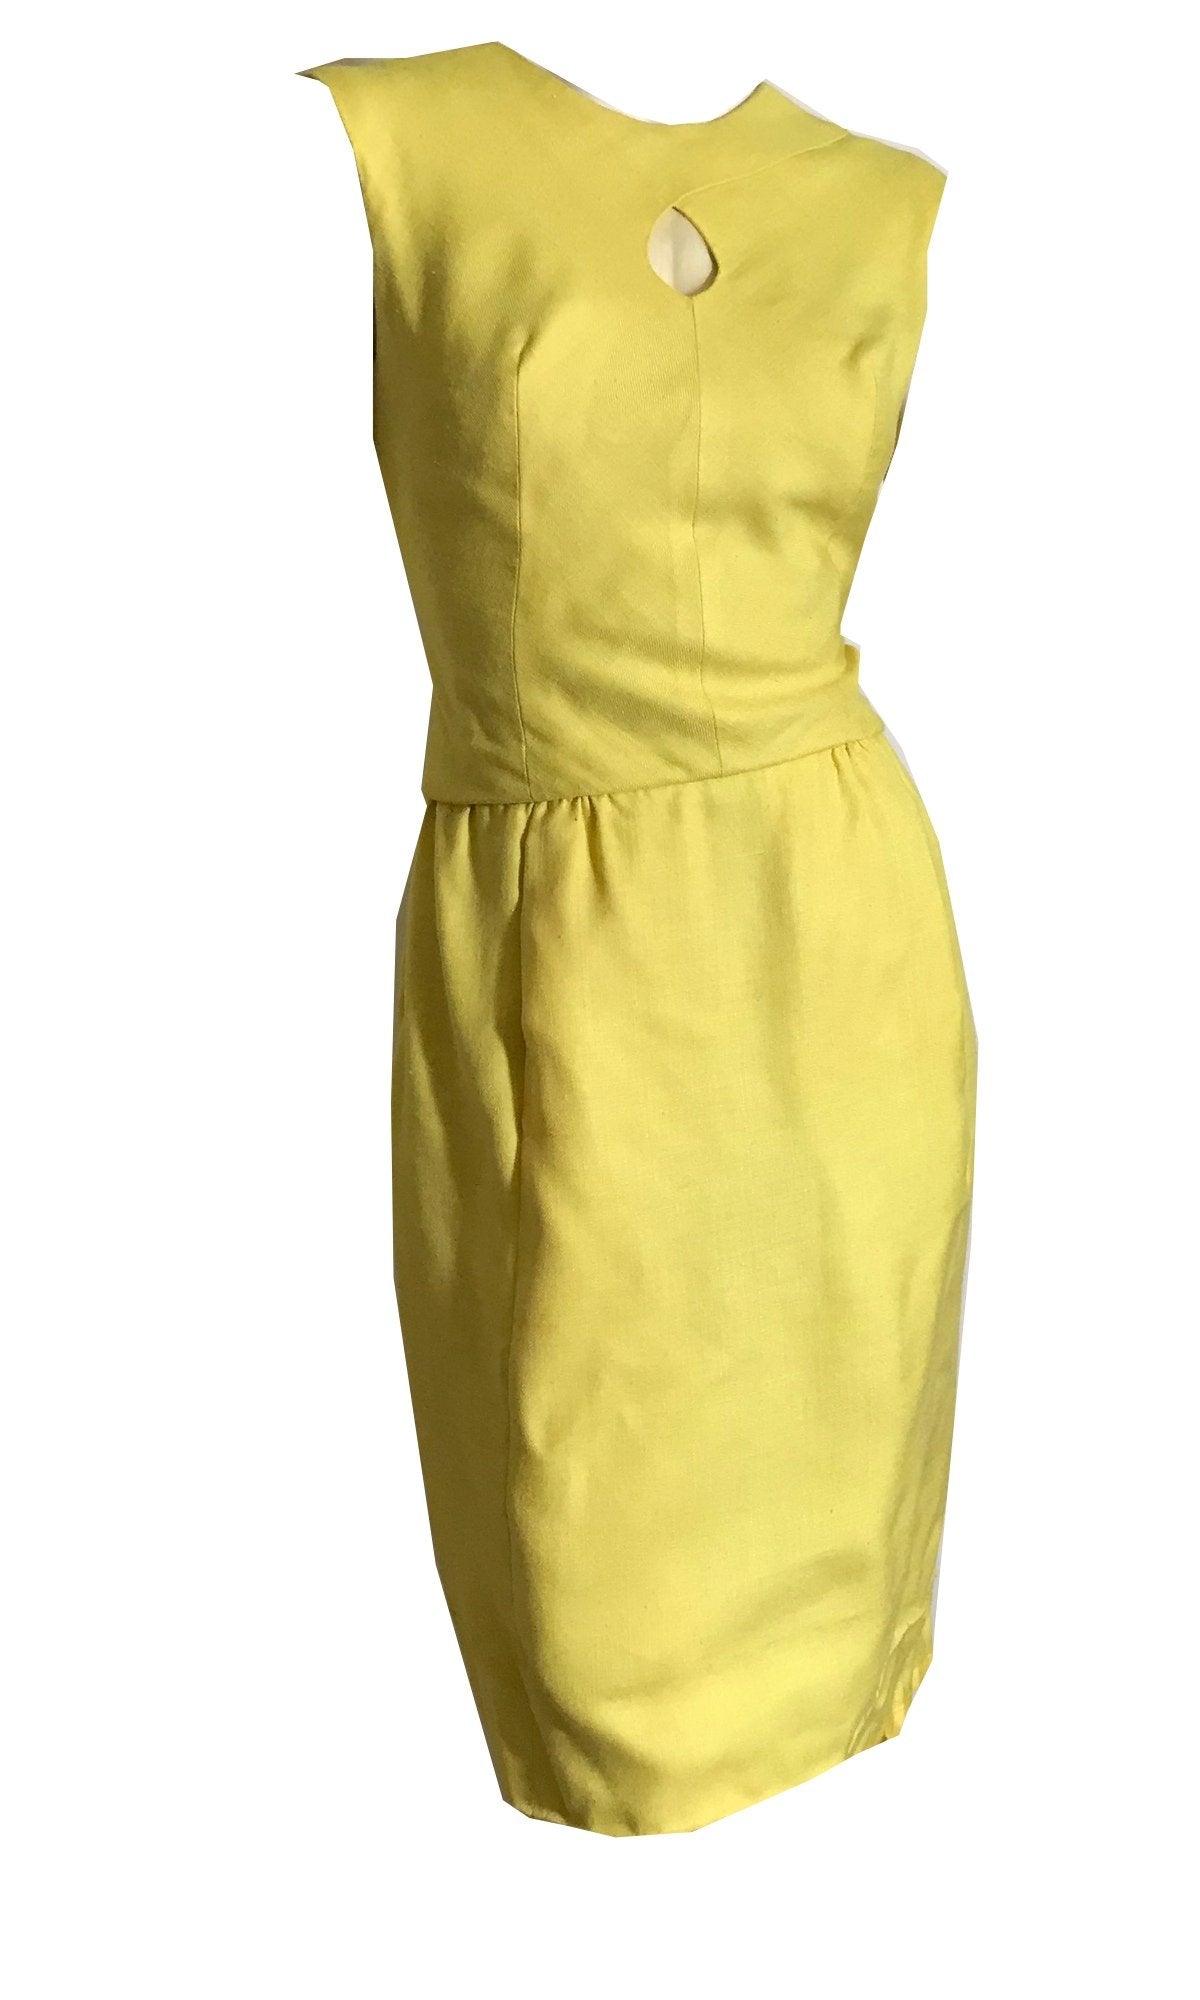 Lemony Yellow Sleeveless Dress with Keyhole Neckline and Scarf circa 1960s